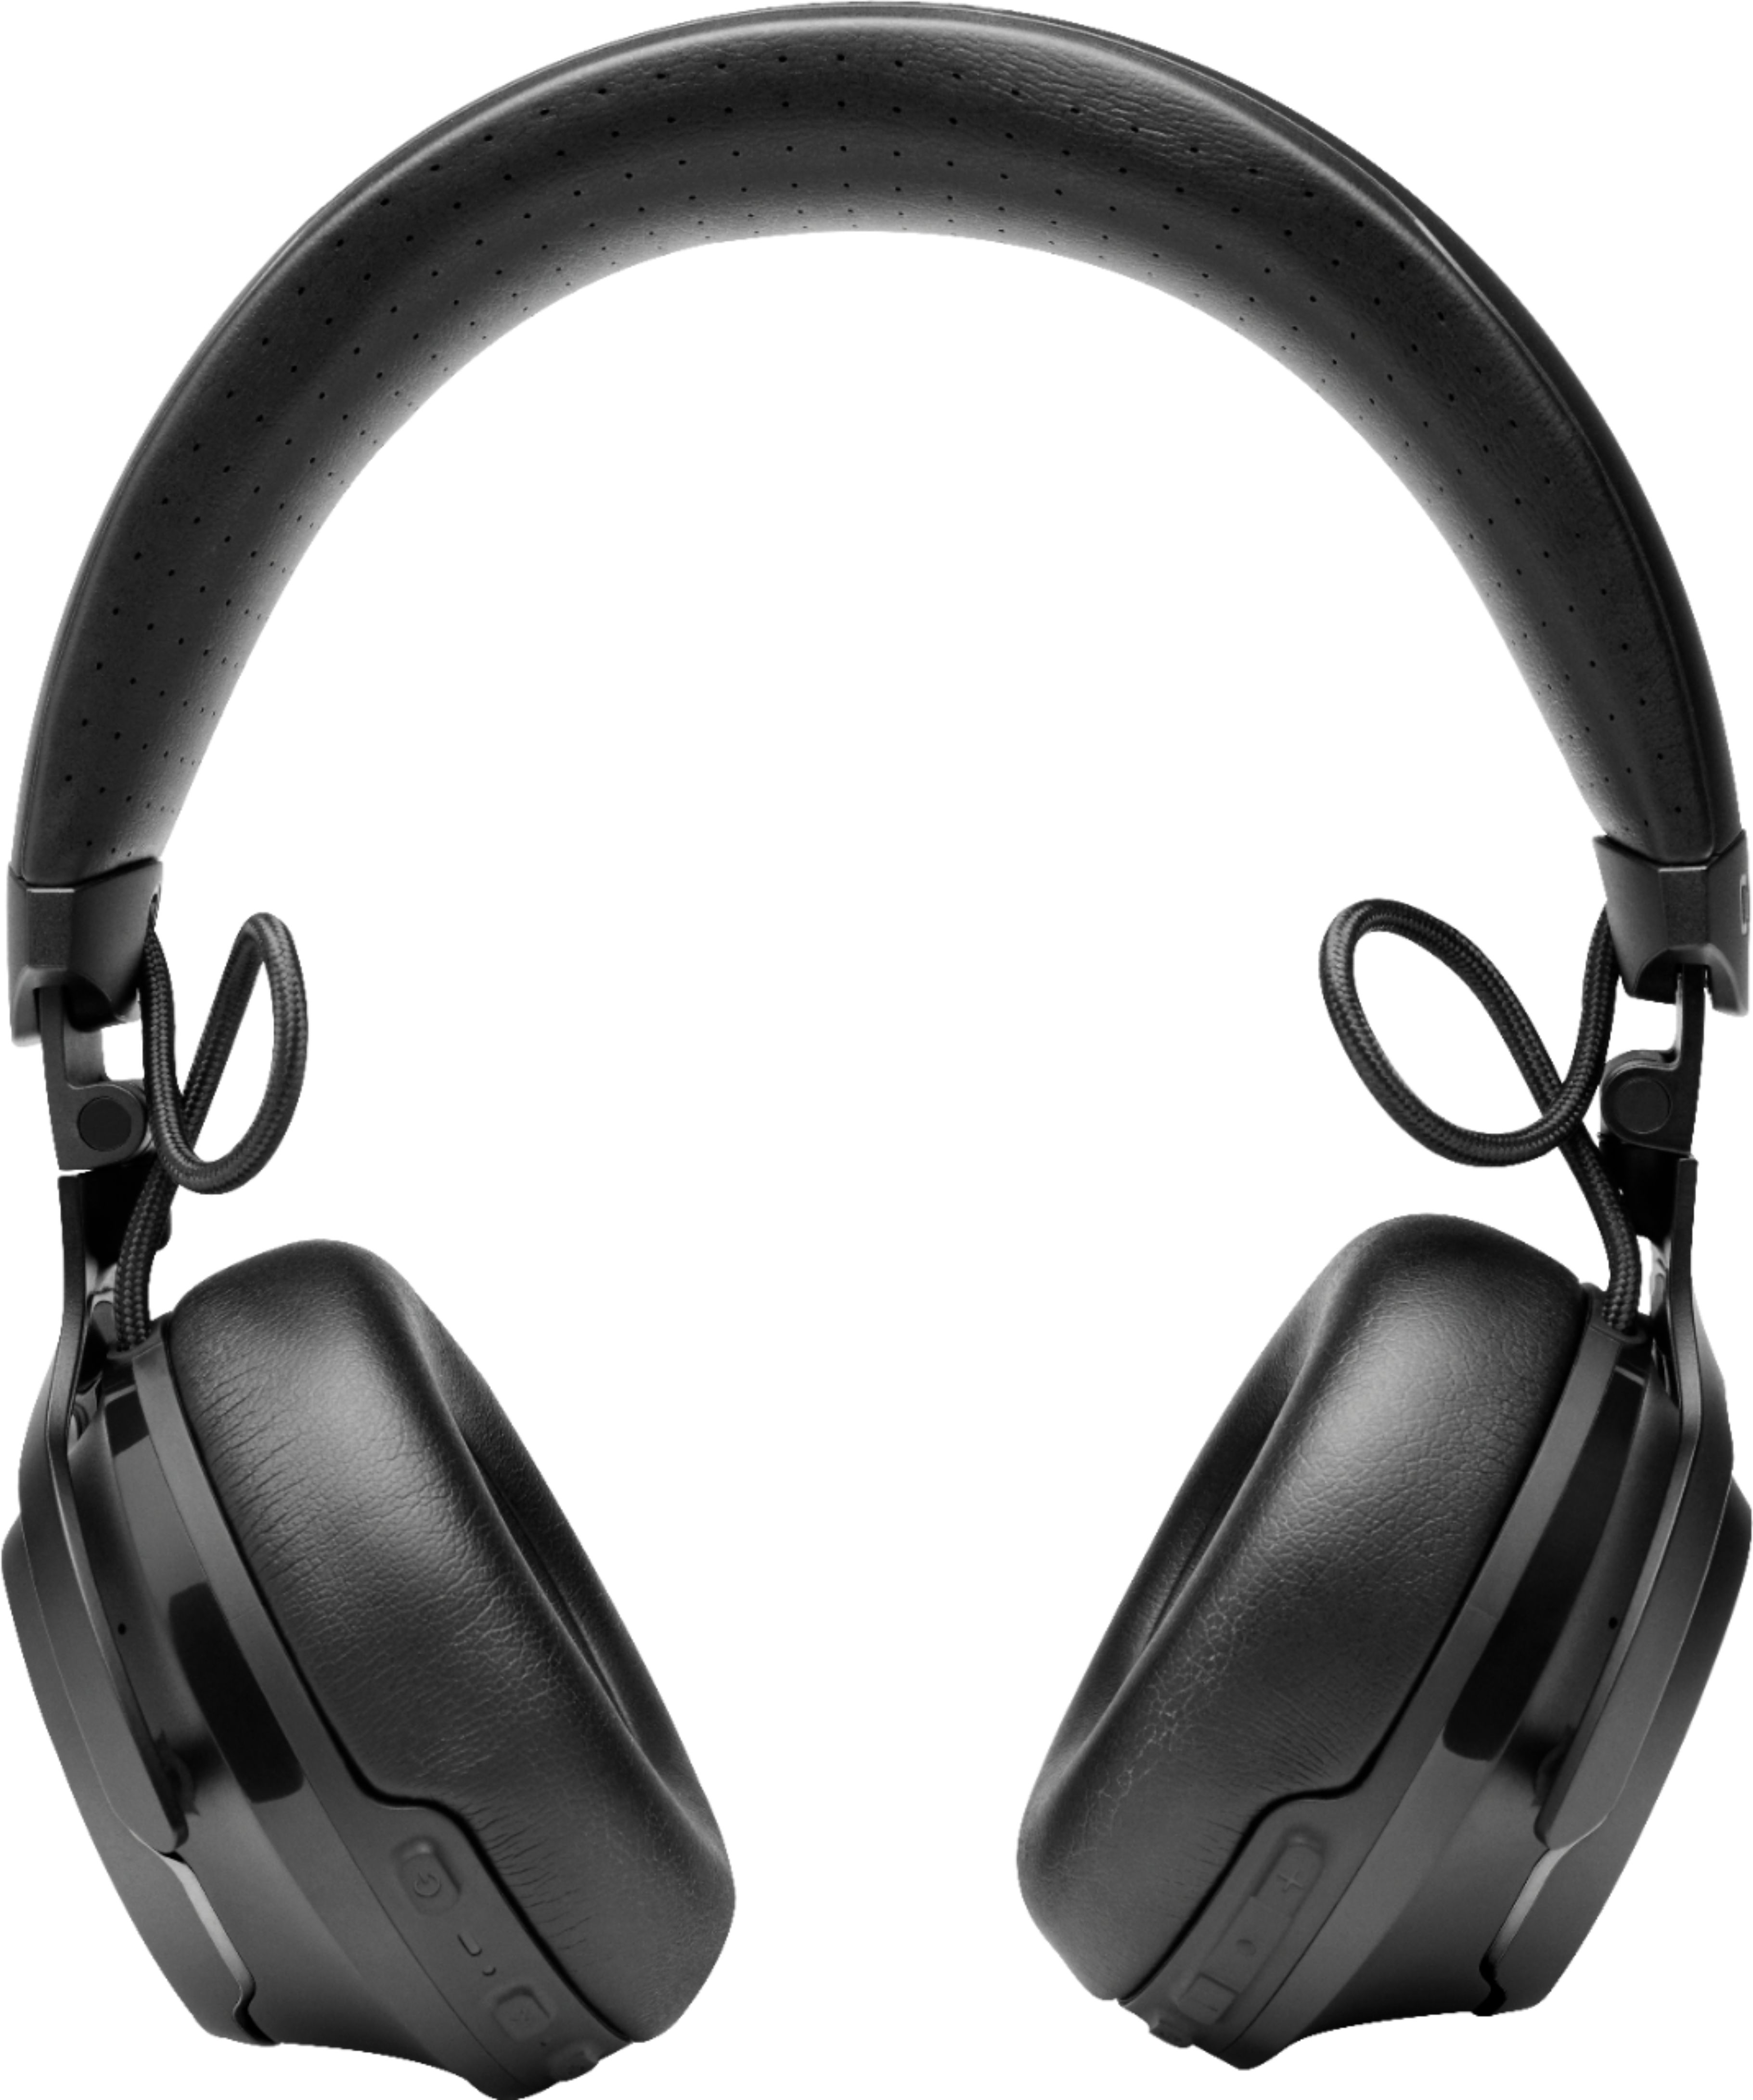 Angle View: JBL - Club 700BT Wireless Over-the-Ear Headphones - Black